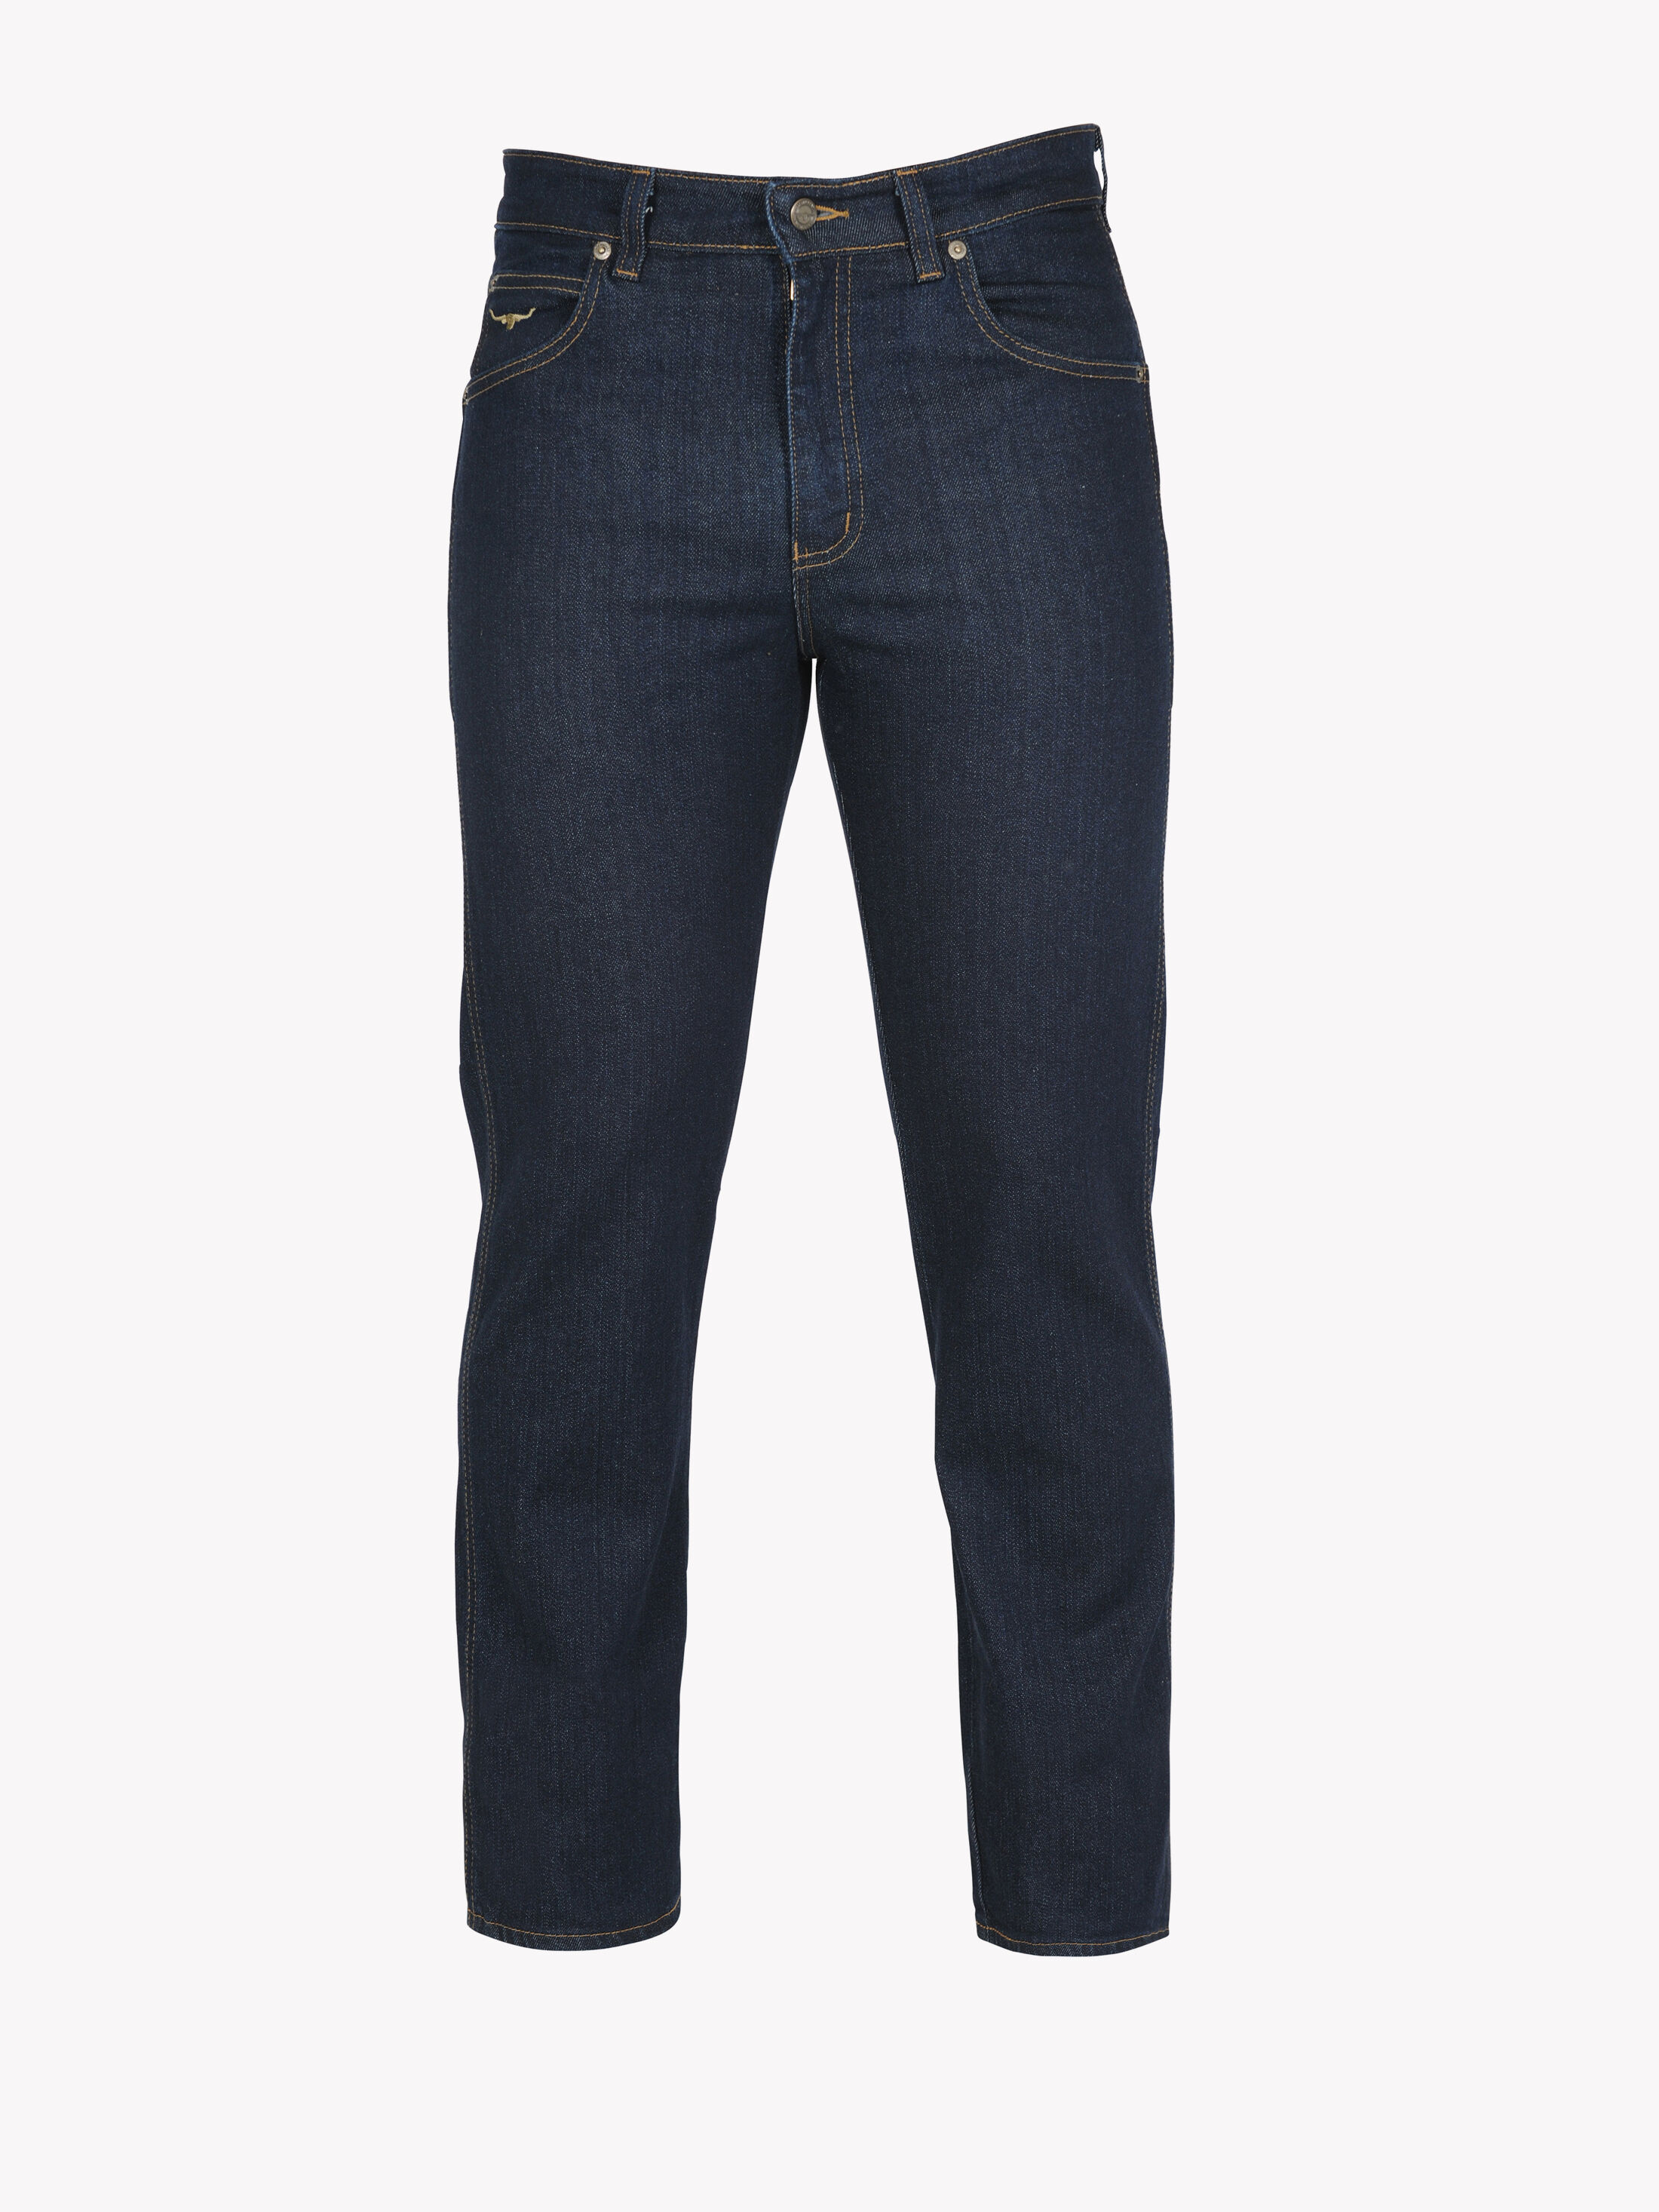 Linesman Jeans Indigo Slim - Men's 